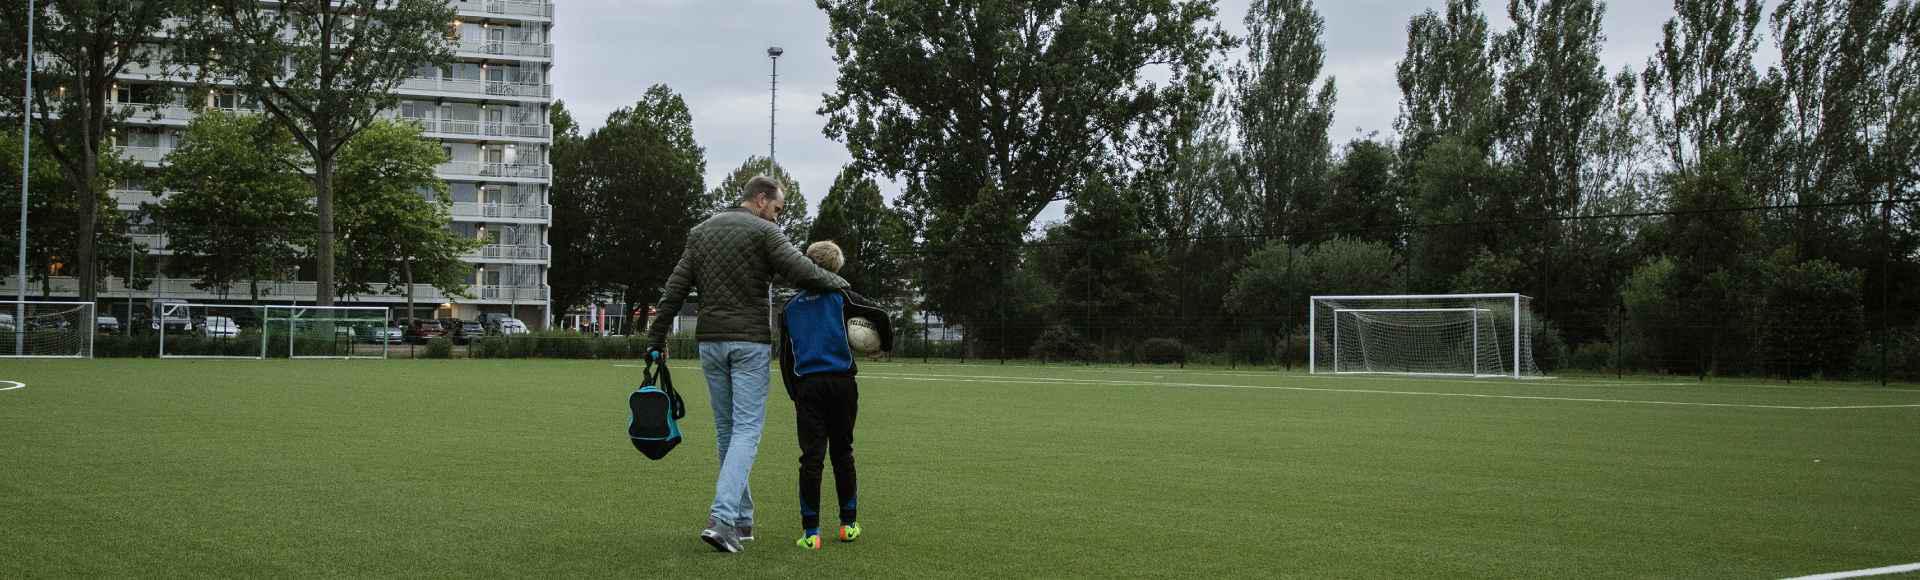 Header-vader-zoon-voetbalveld-na-training